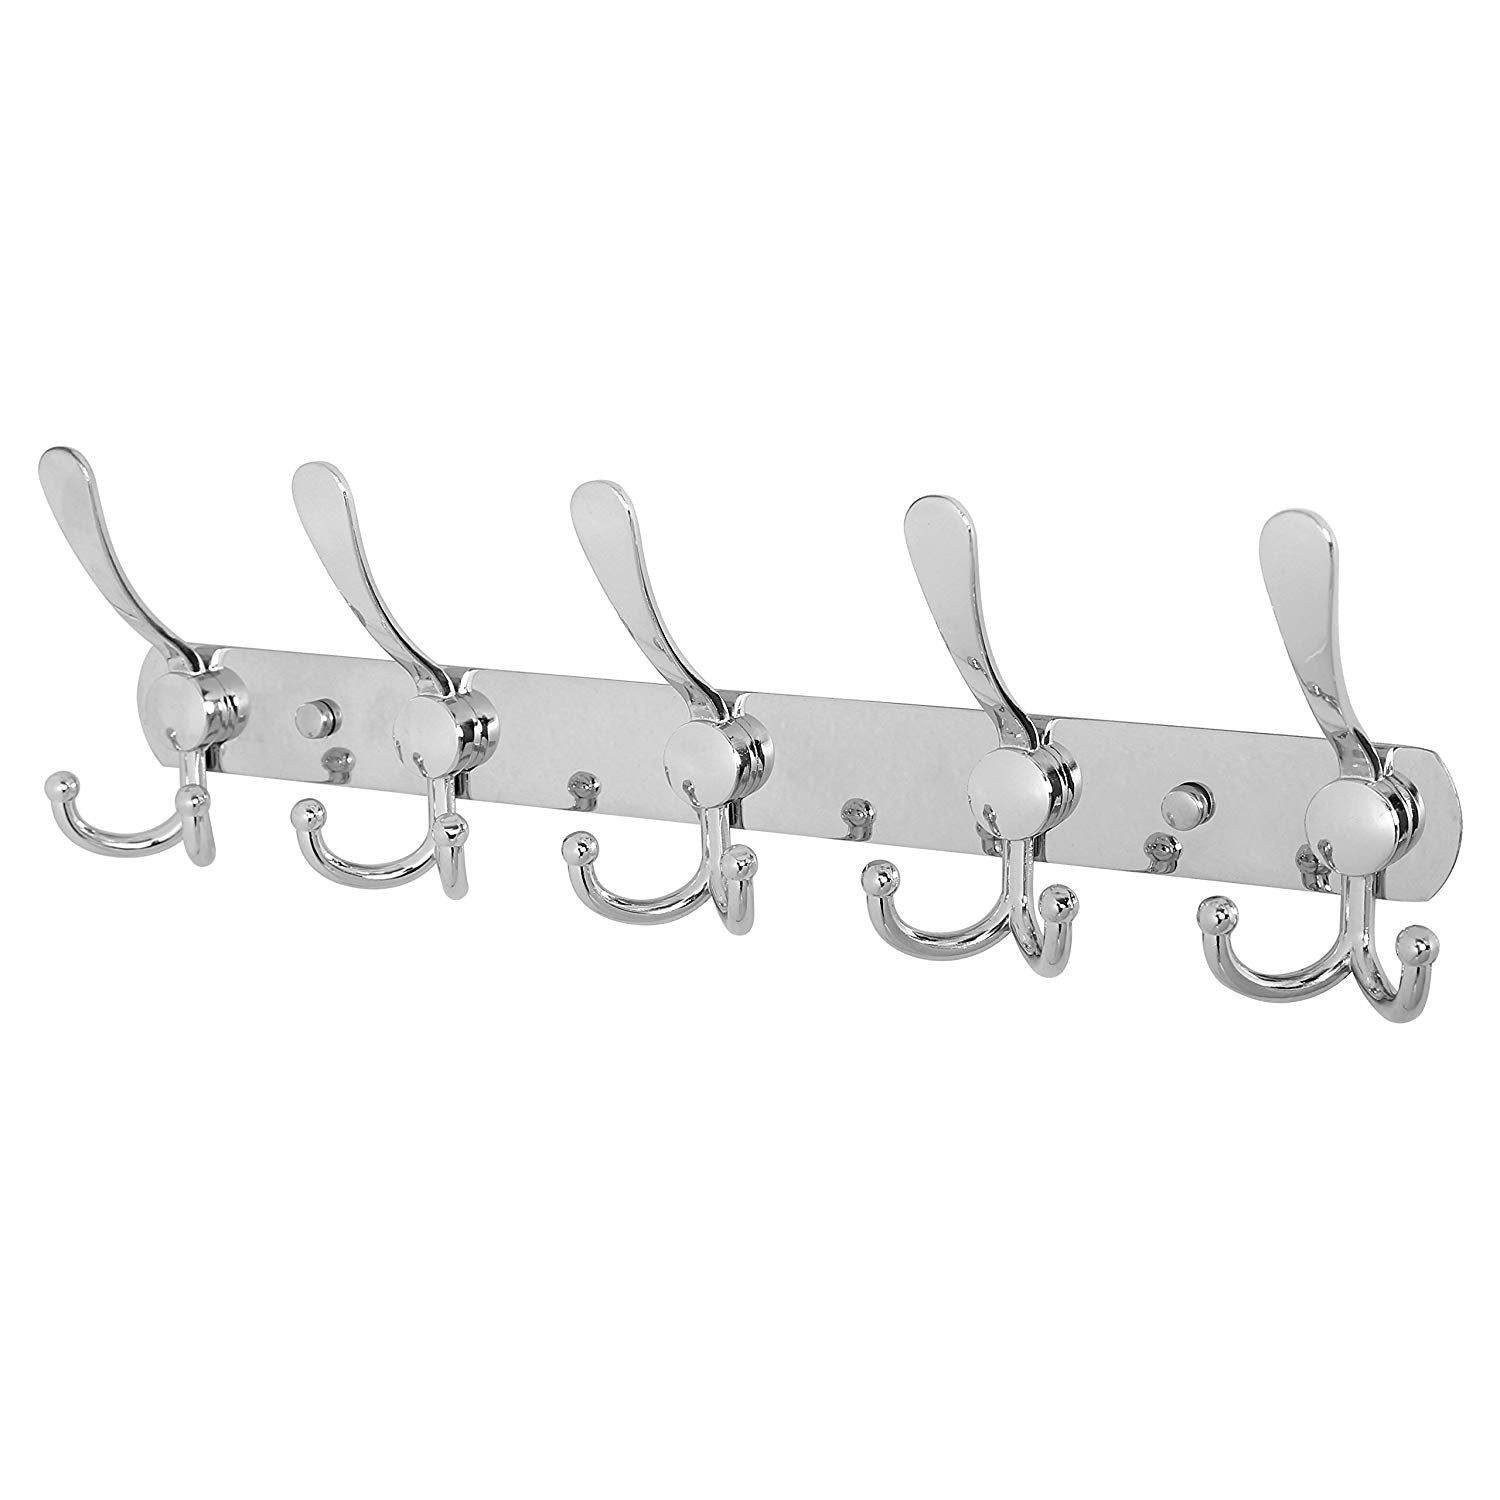 WEBI Coat Rack Wall Mounted - Tri Hooks with 5 Coat Hat Hook Rack Towel Hanger Colset Organizer for Garage Storage, Home, Office, Aluminum/Chrome Finish